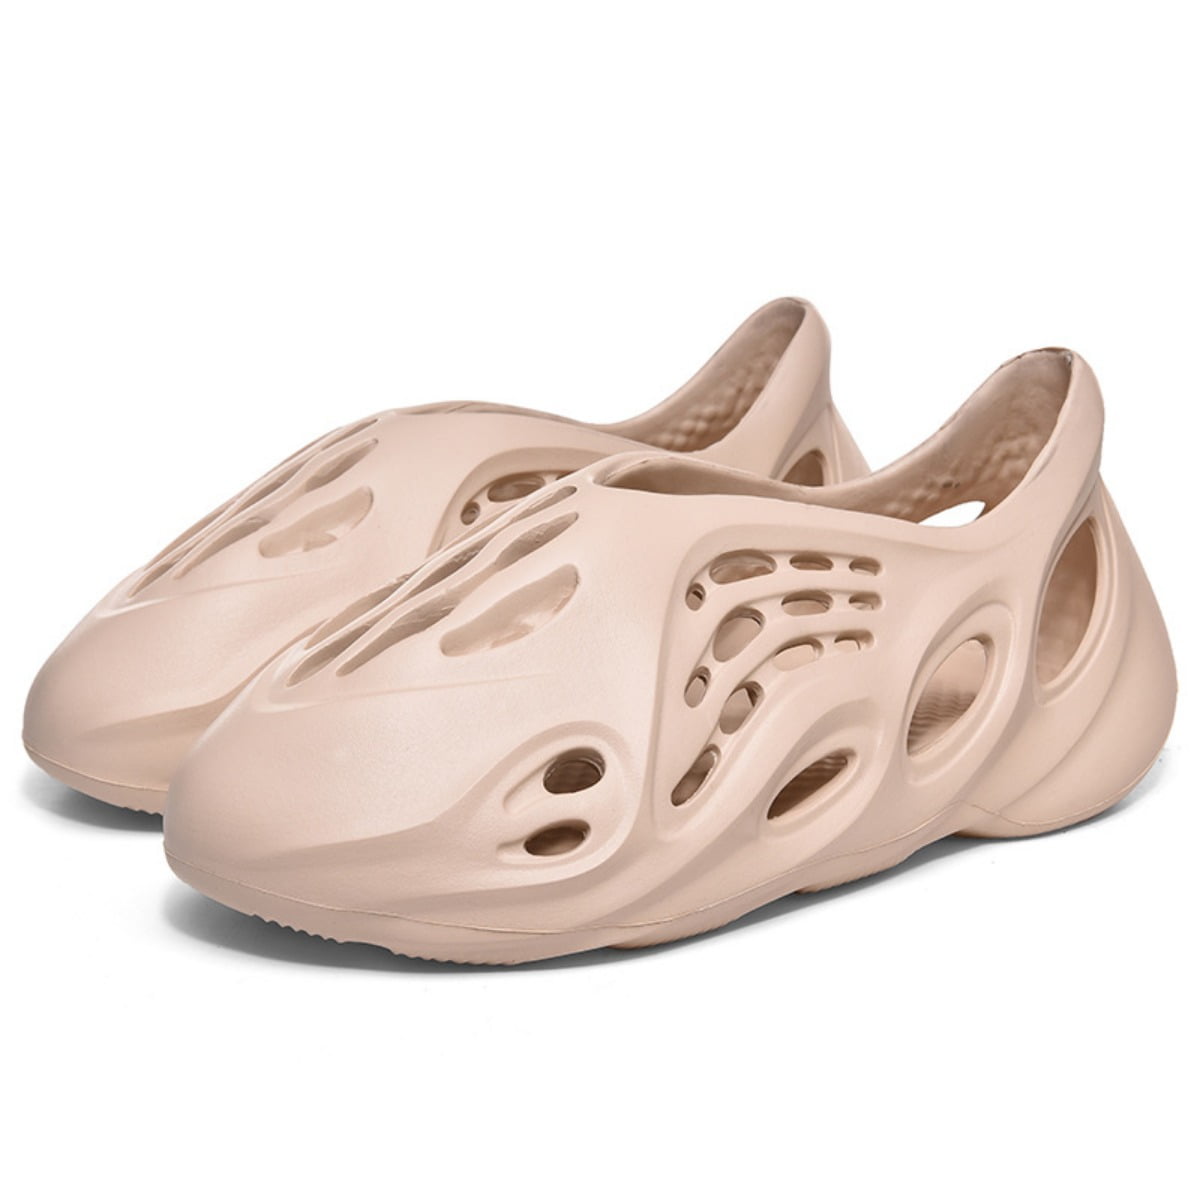  Foam Runner Shoes, Unisex Foam Runner Sneakers Pillow Cloud  Shoes Non-Slip Lightweight Breathable Soft Fashion Sandals,Black,4.5/3.5